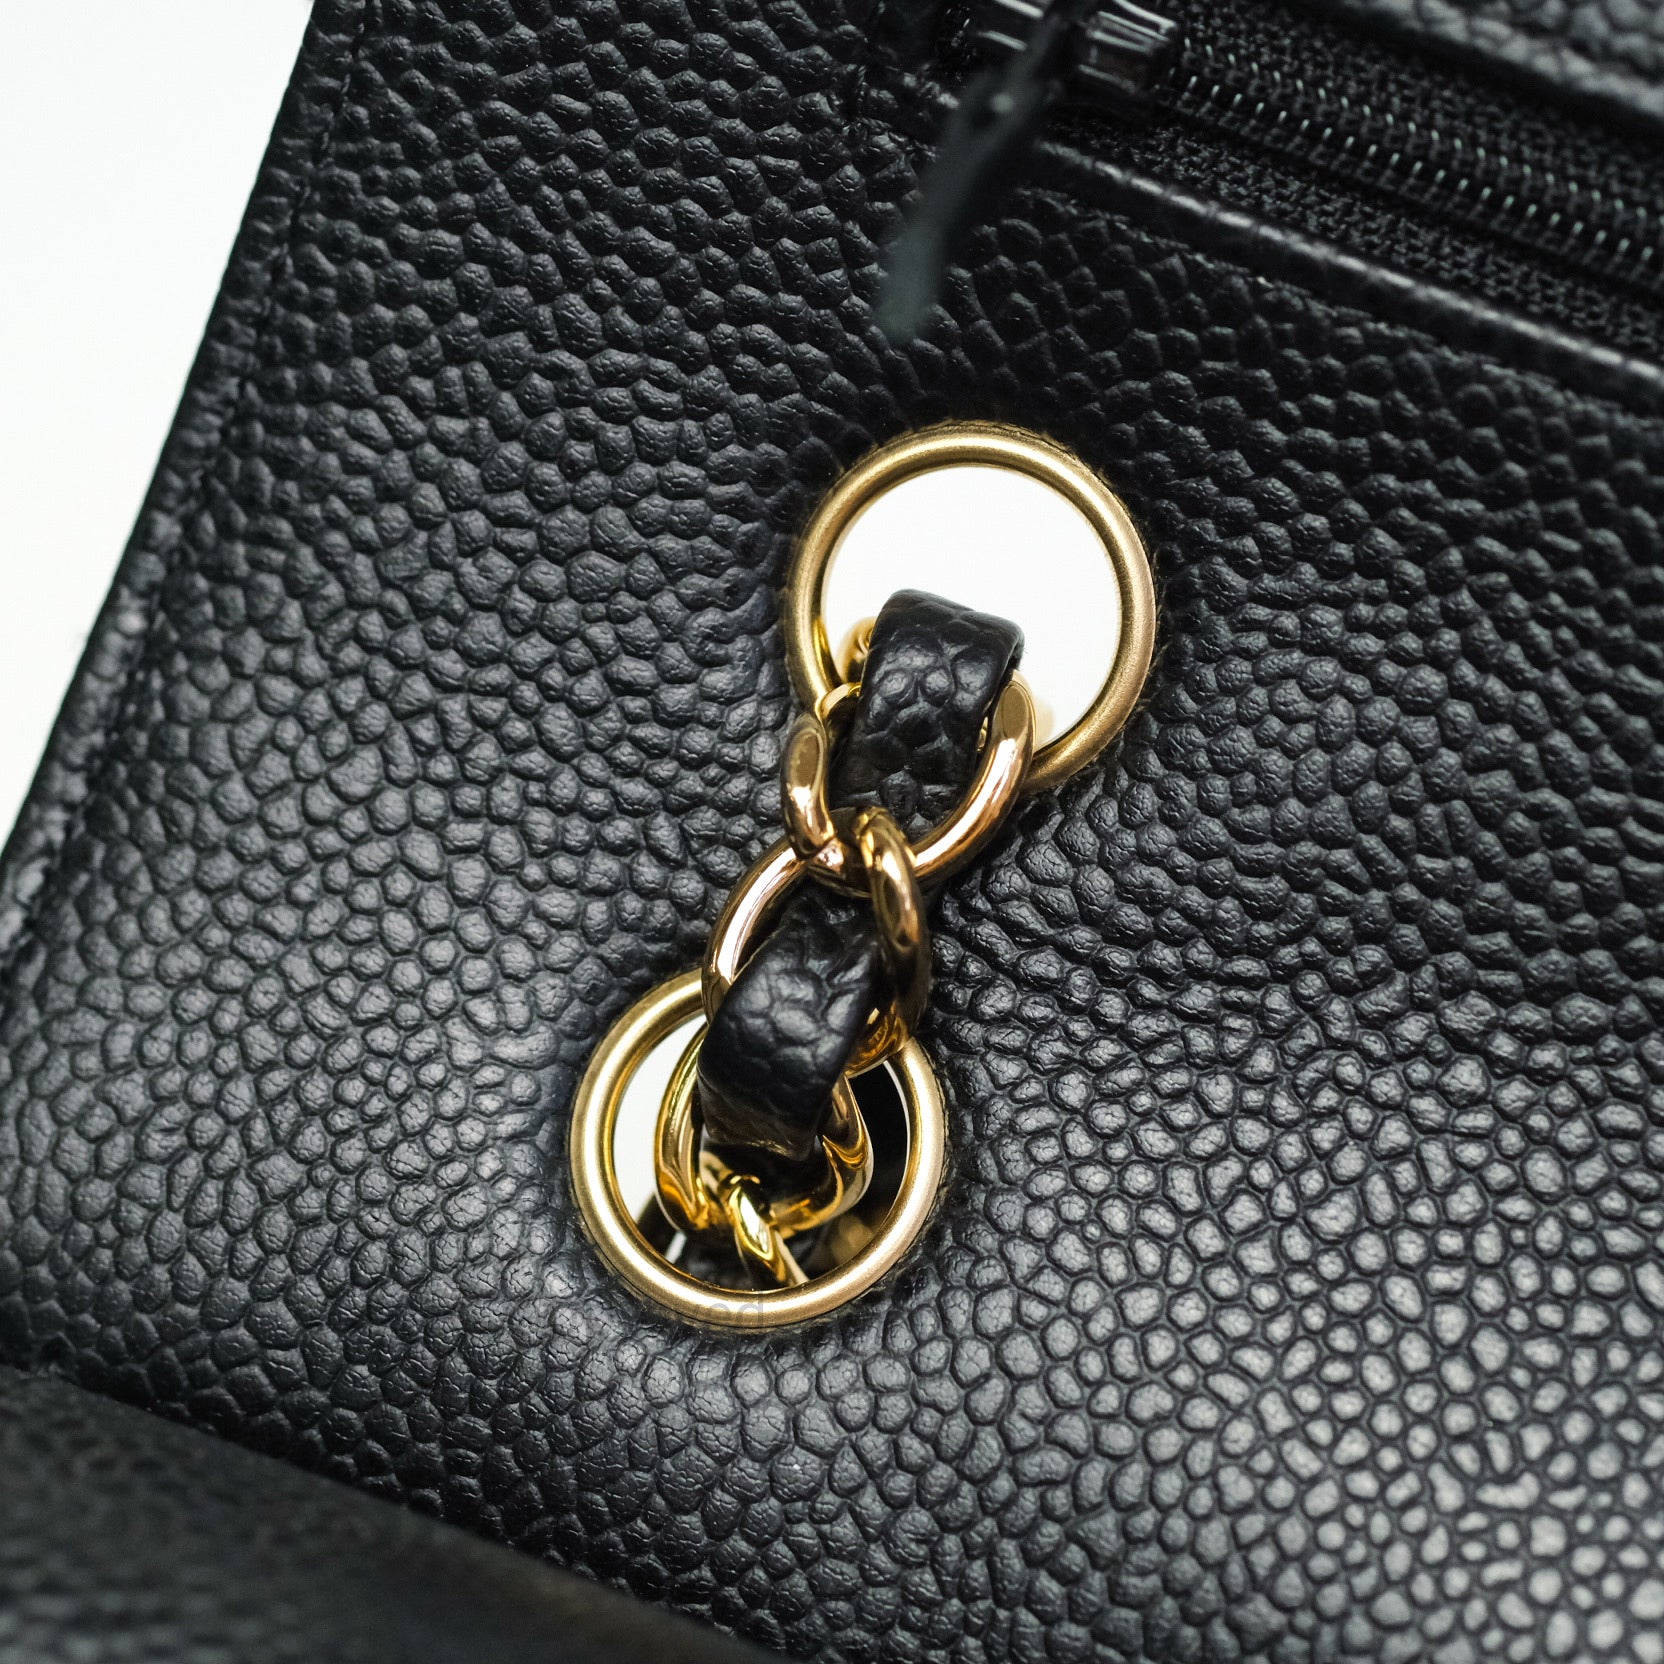 Inside a Medium Classic Chanel Double Flap Bag - Lollipuff